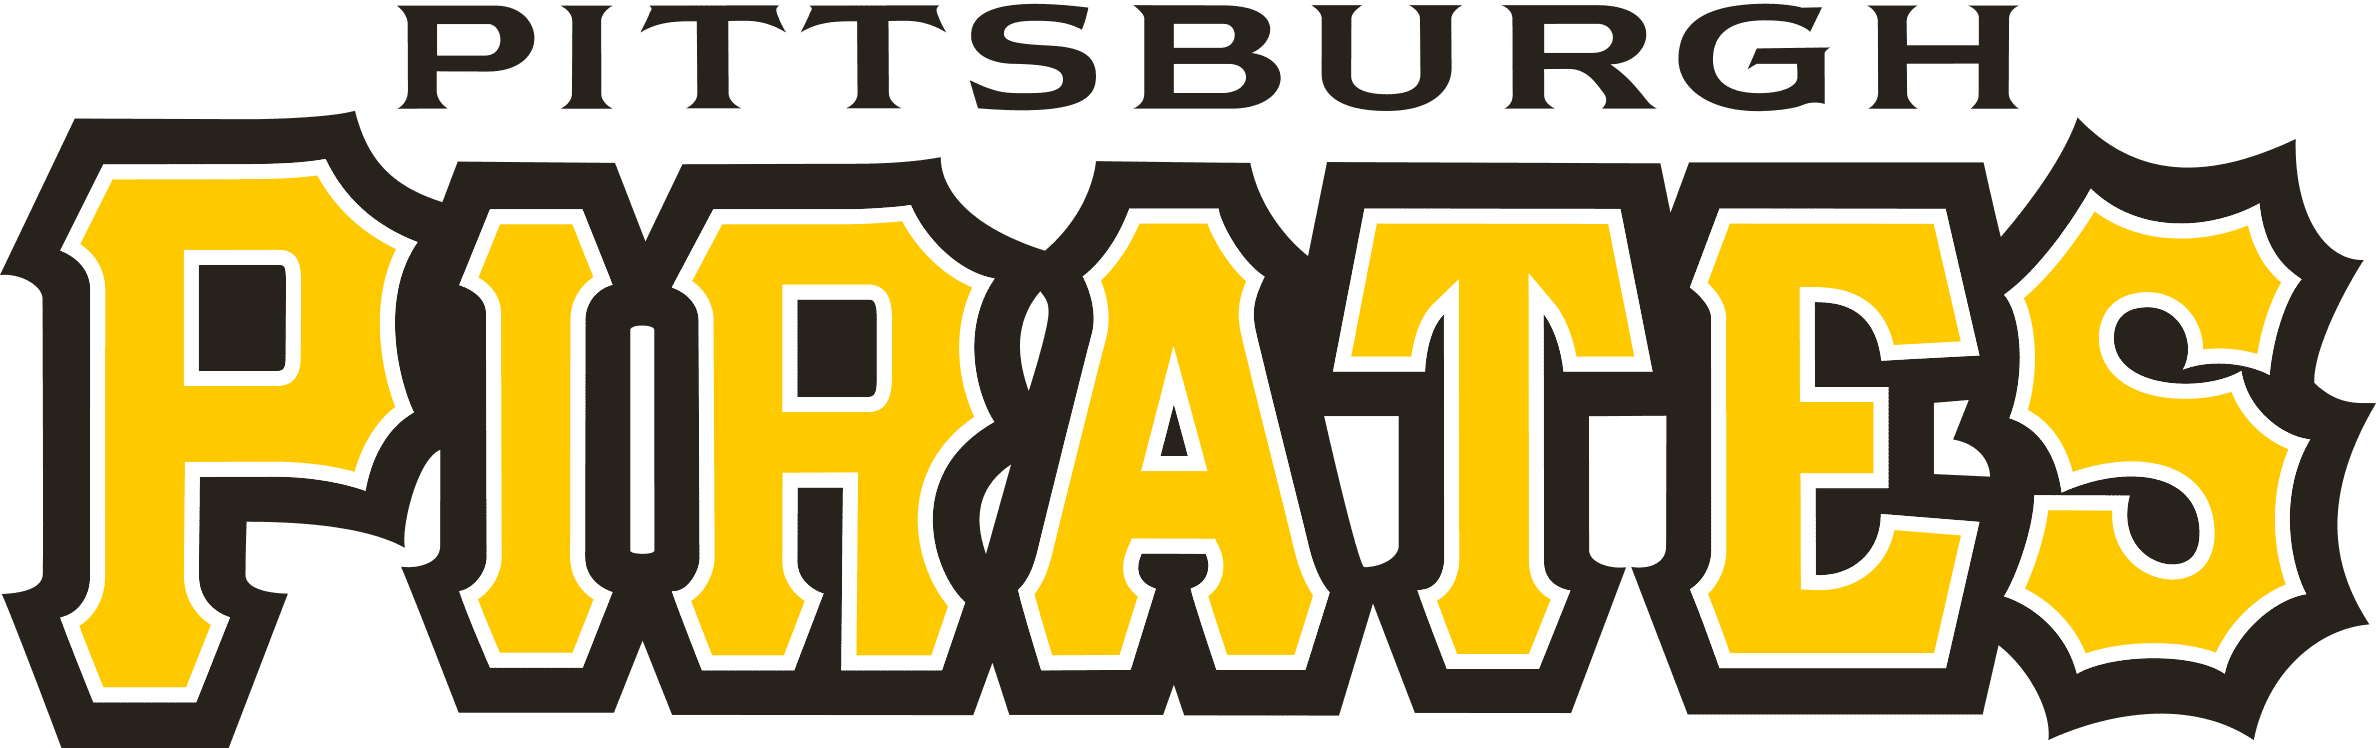 Pittsburgh Pirates Mlb Svg Cut Files Baseball Clipart Bundle